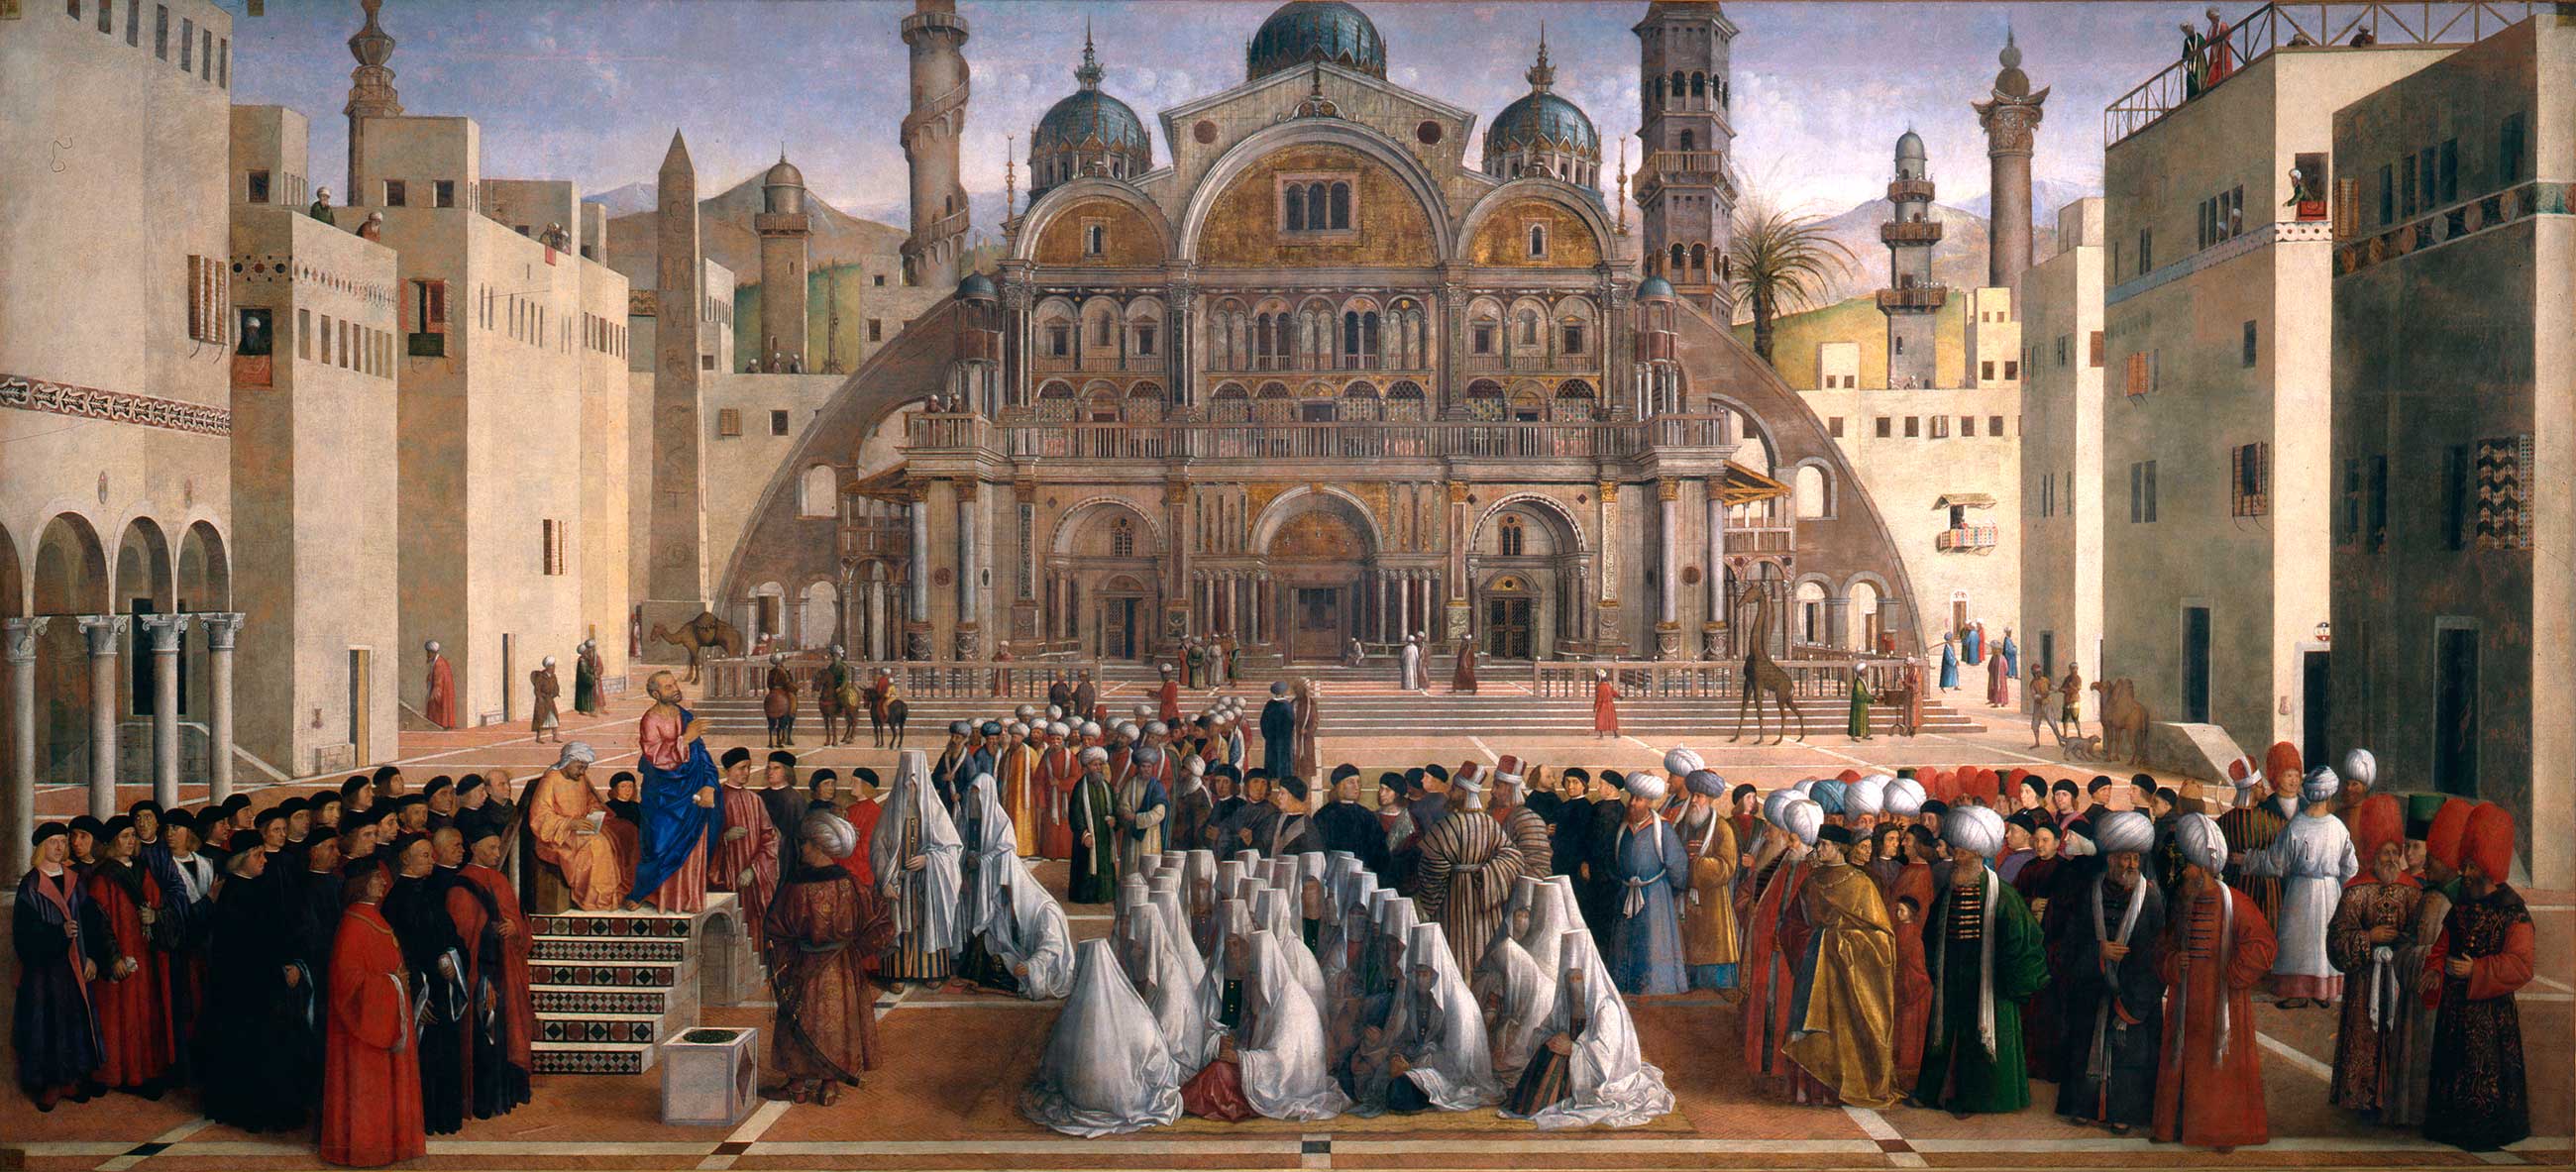 Gentile y Giovanni Bellini